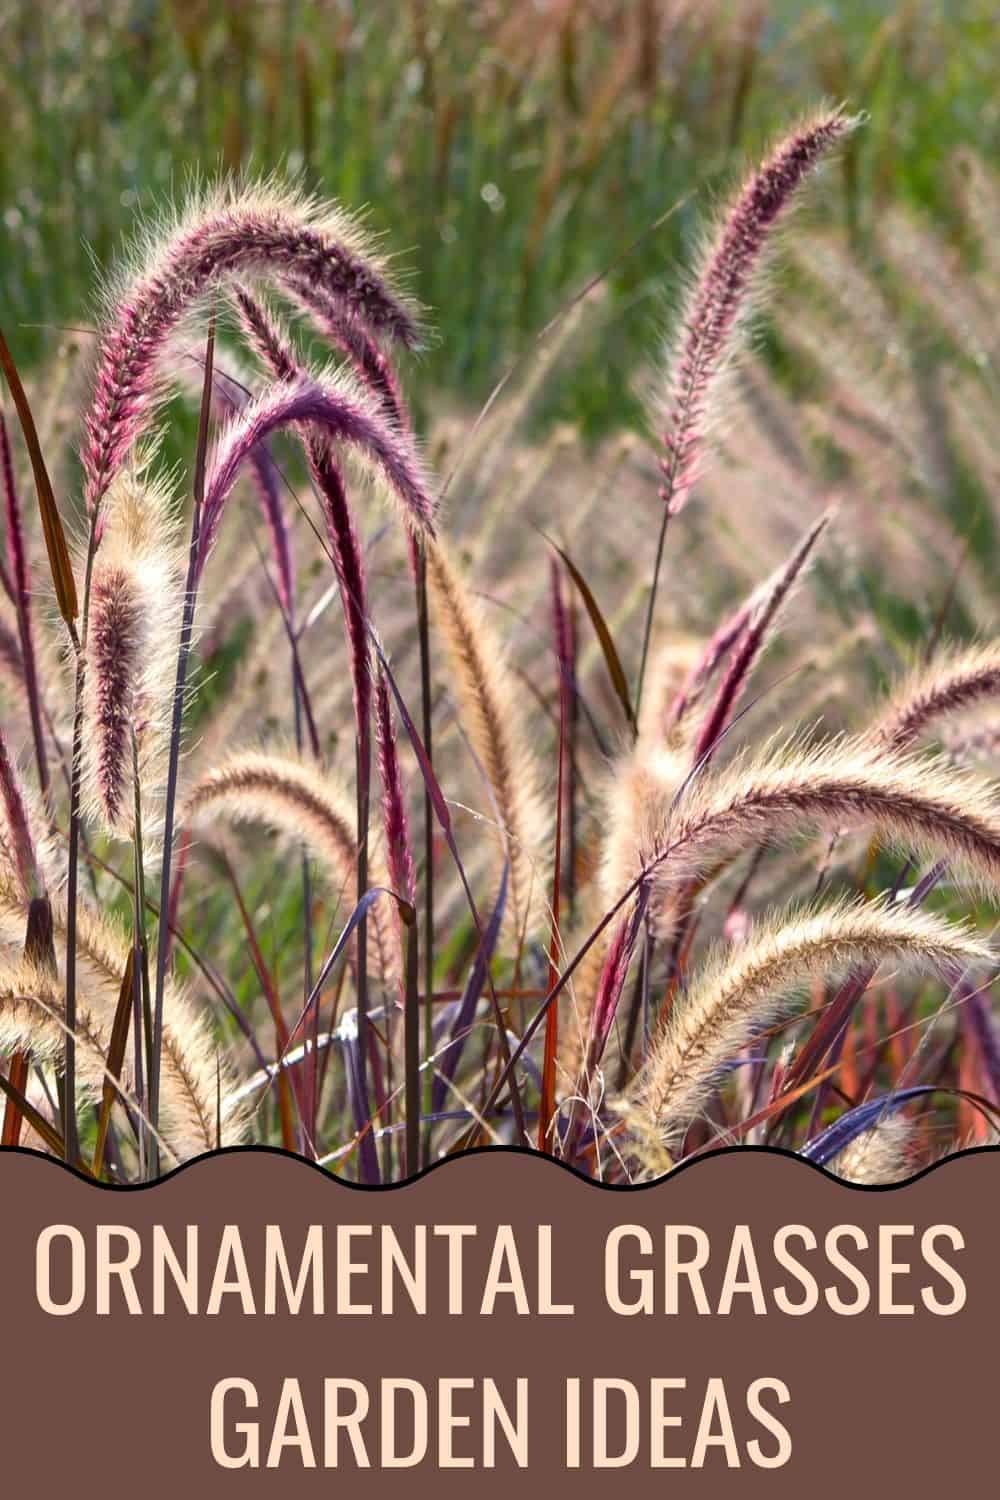 Ornamental grasses garden ideas